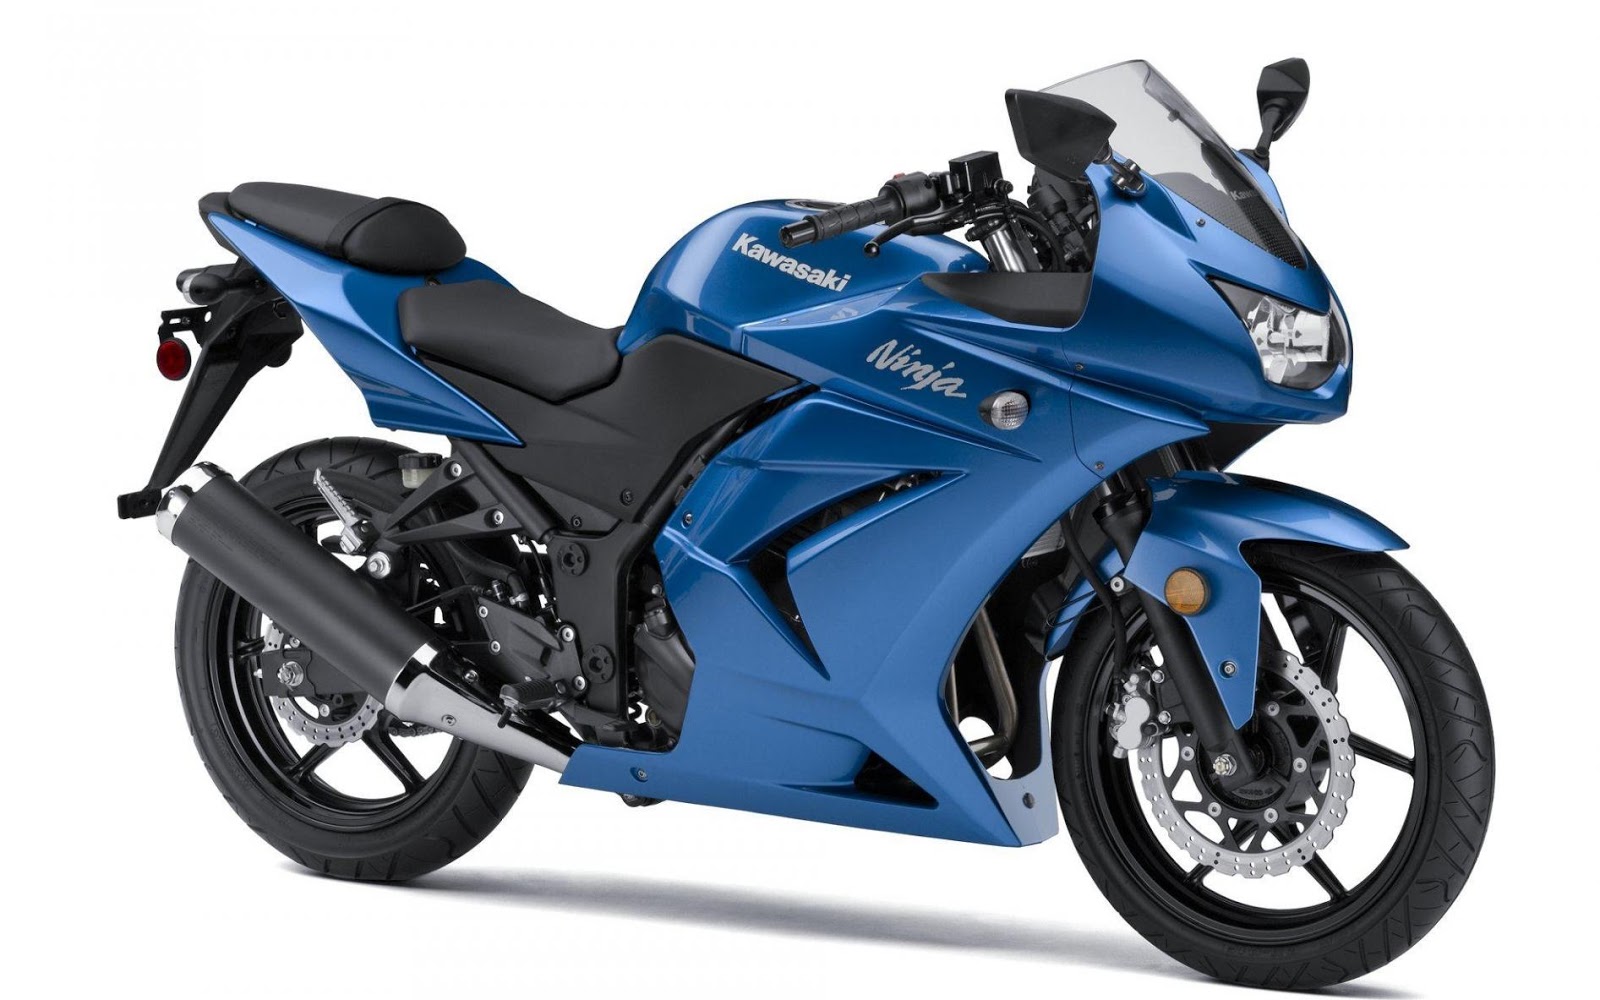 Find New Kawasaki Ninja R Models And Res On Carprice Xyz